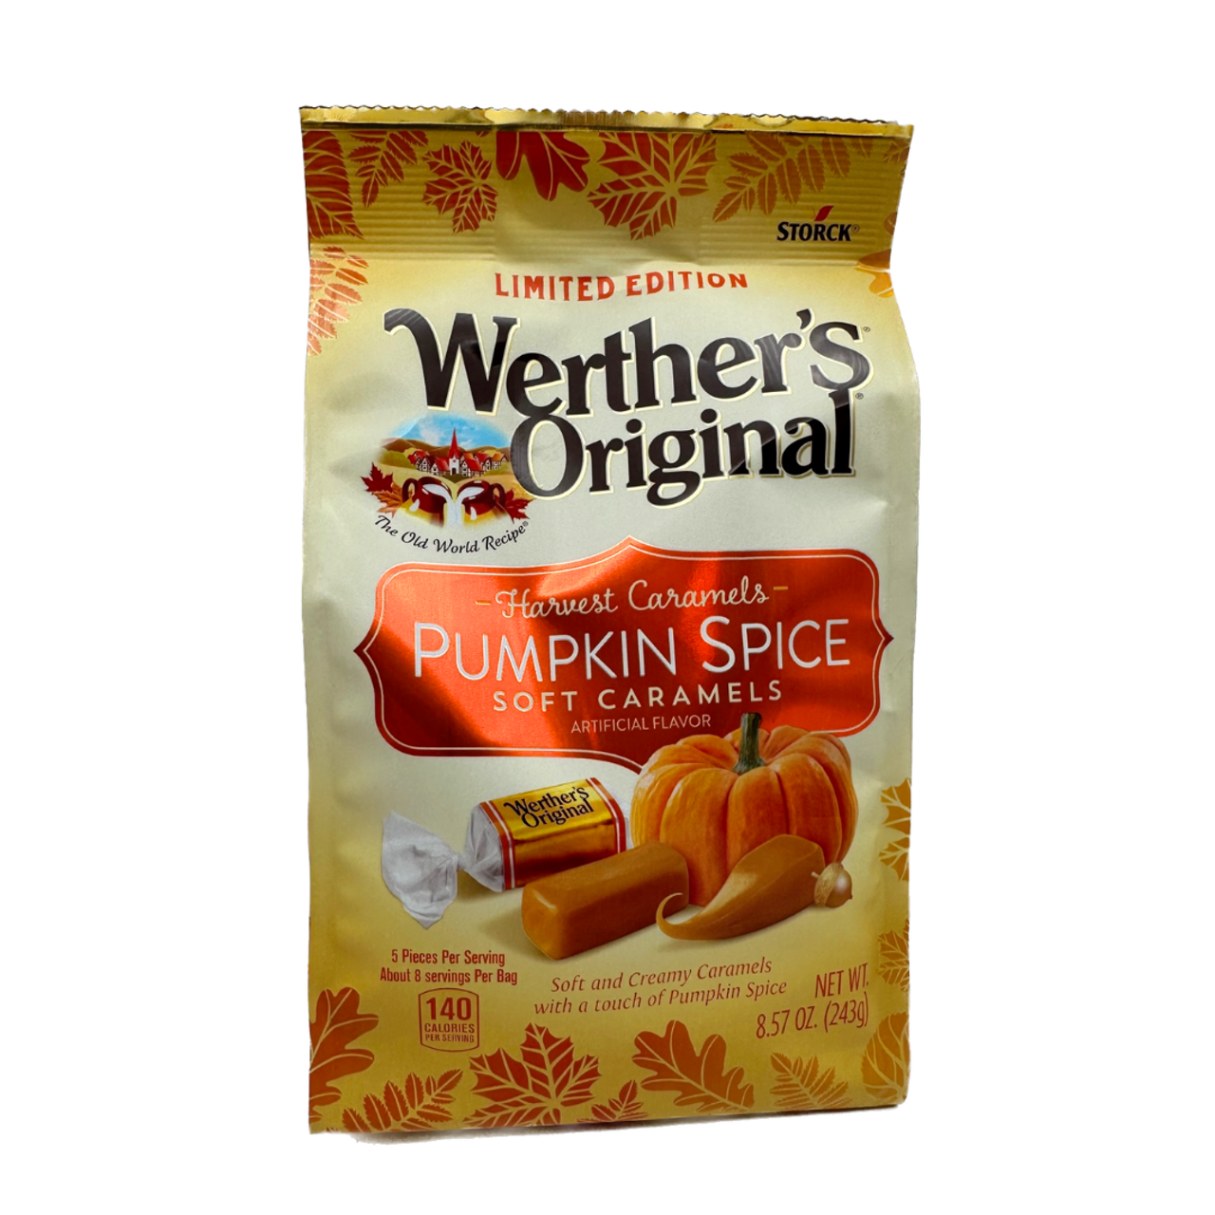 Werther's Originals Pumpkin Spice Soft Caramels 8.57oz - 12ct